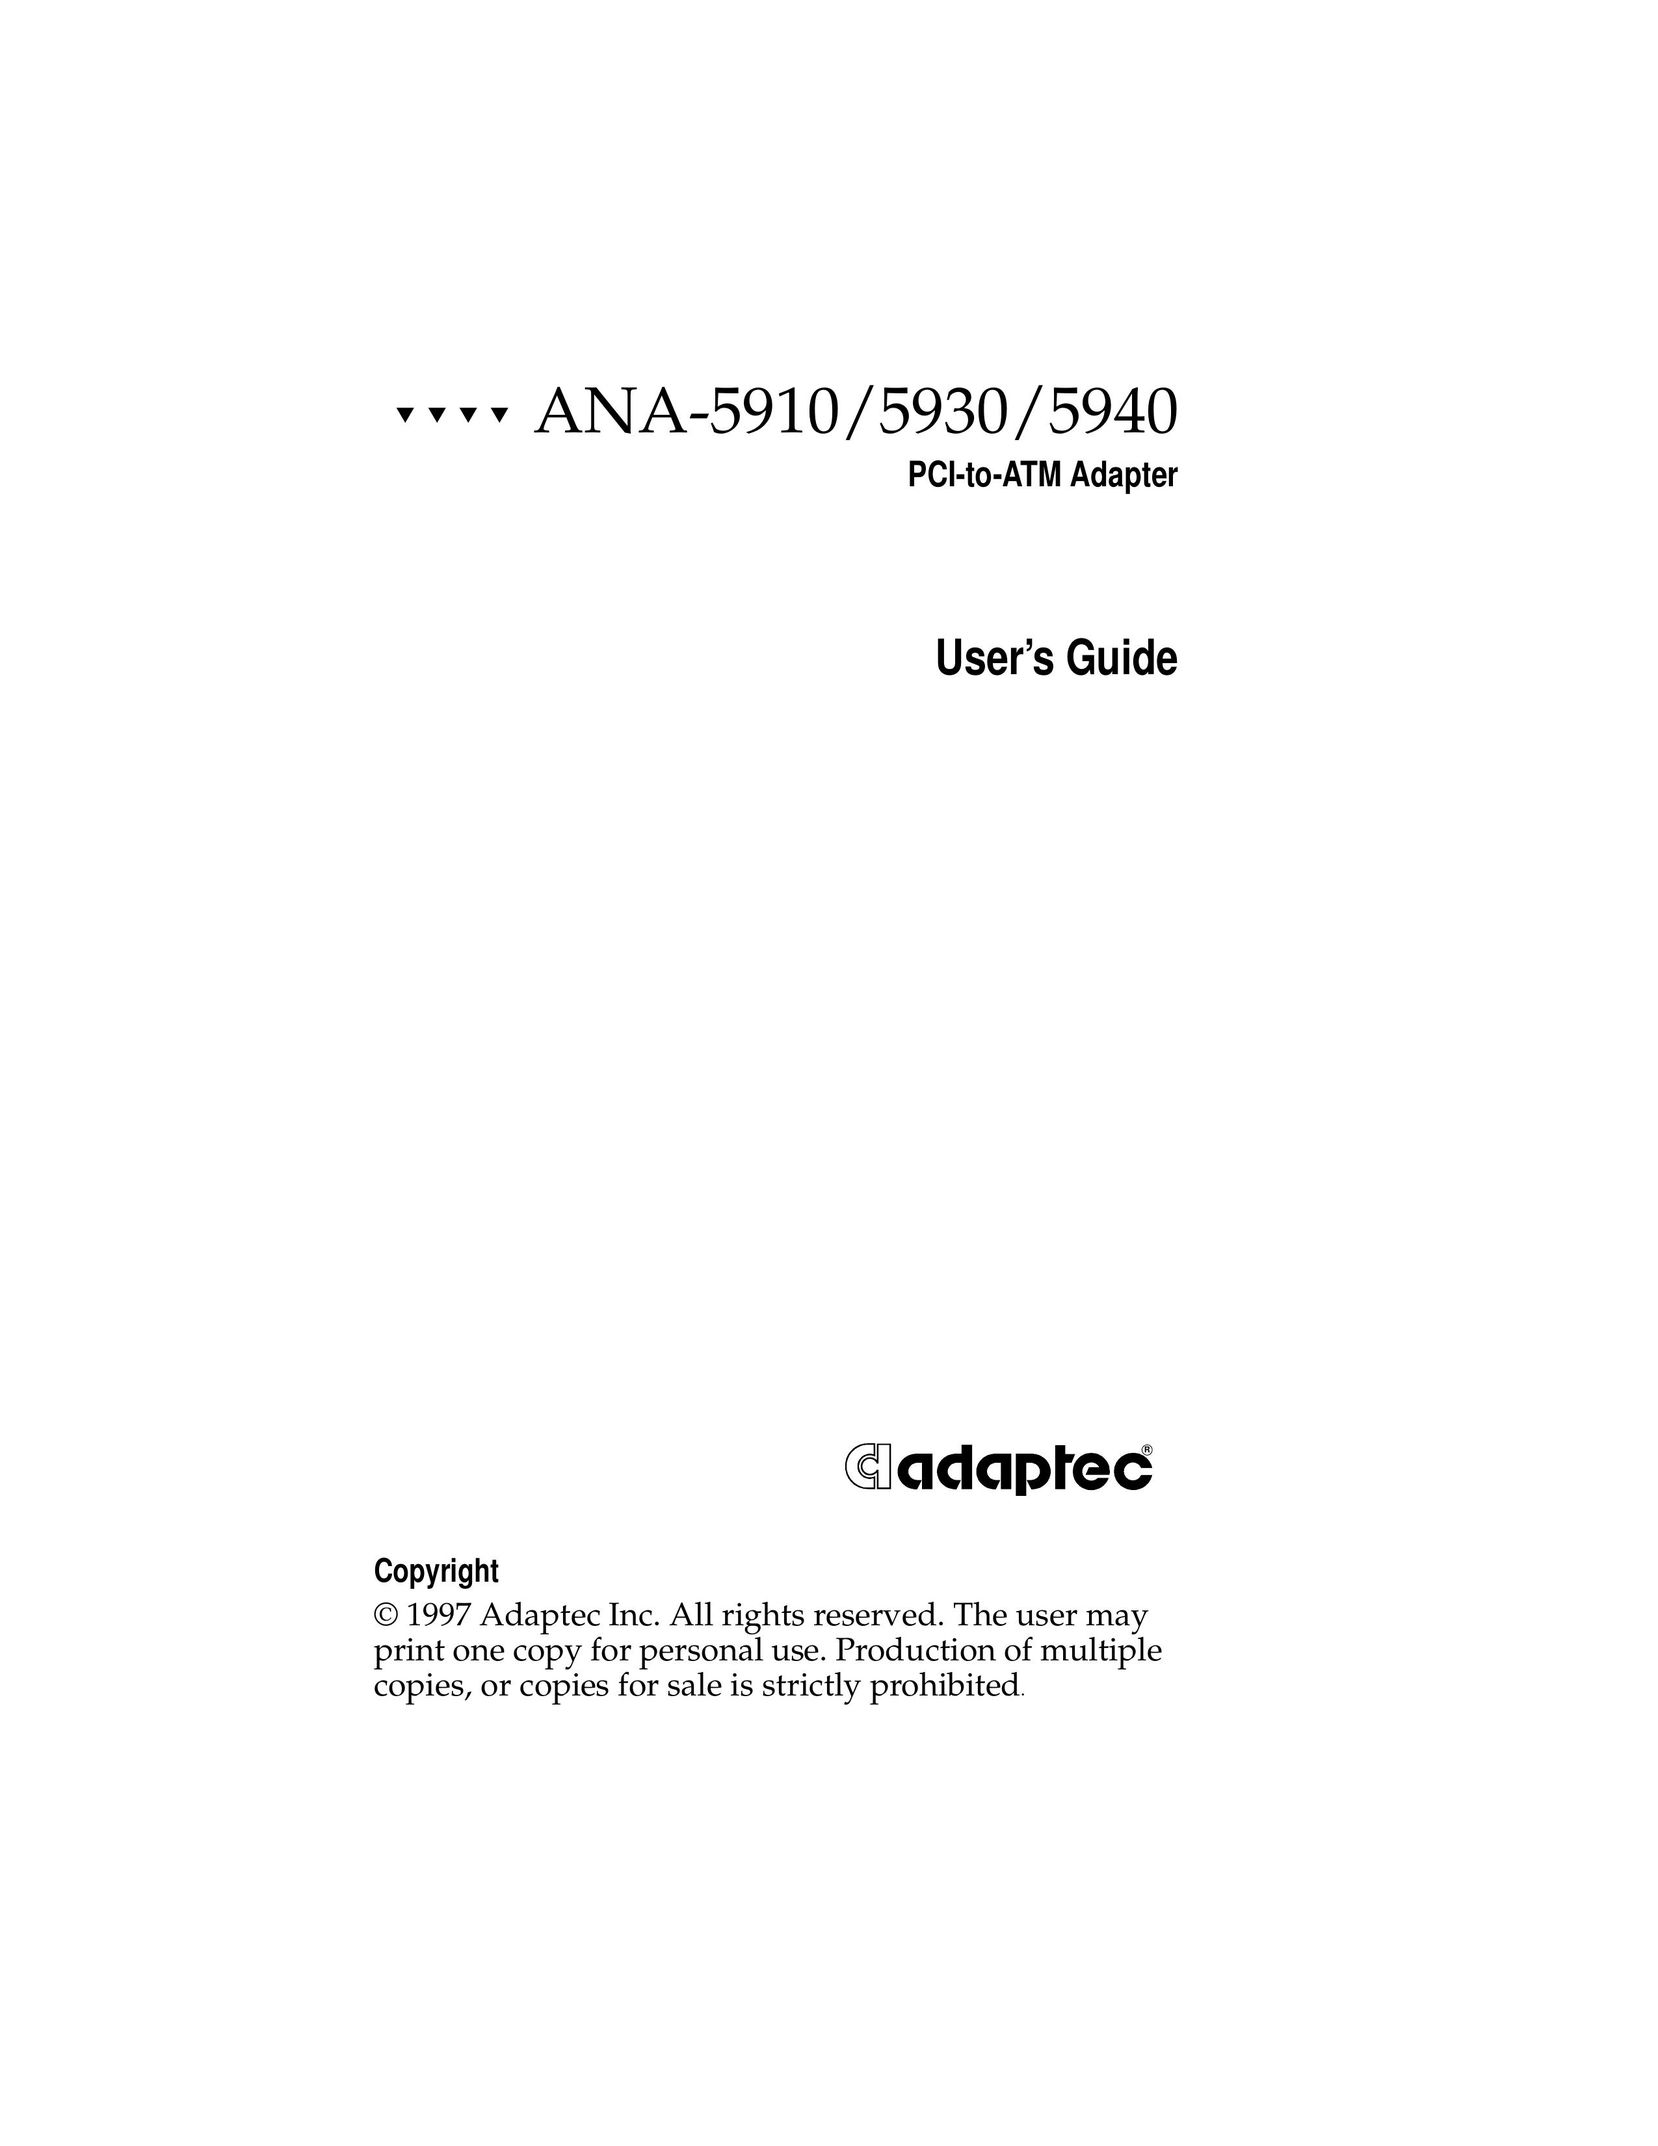 Adaptec ANA-5930 Network Card User Manual